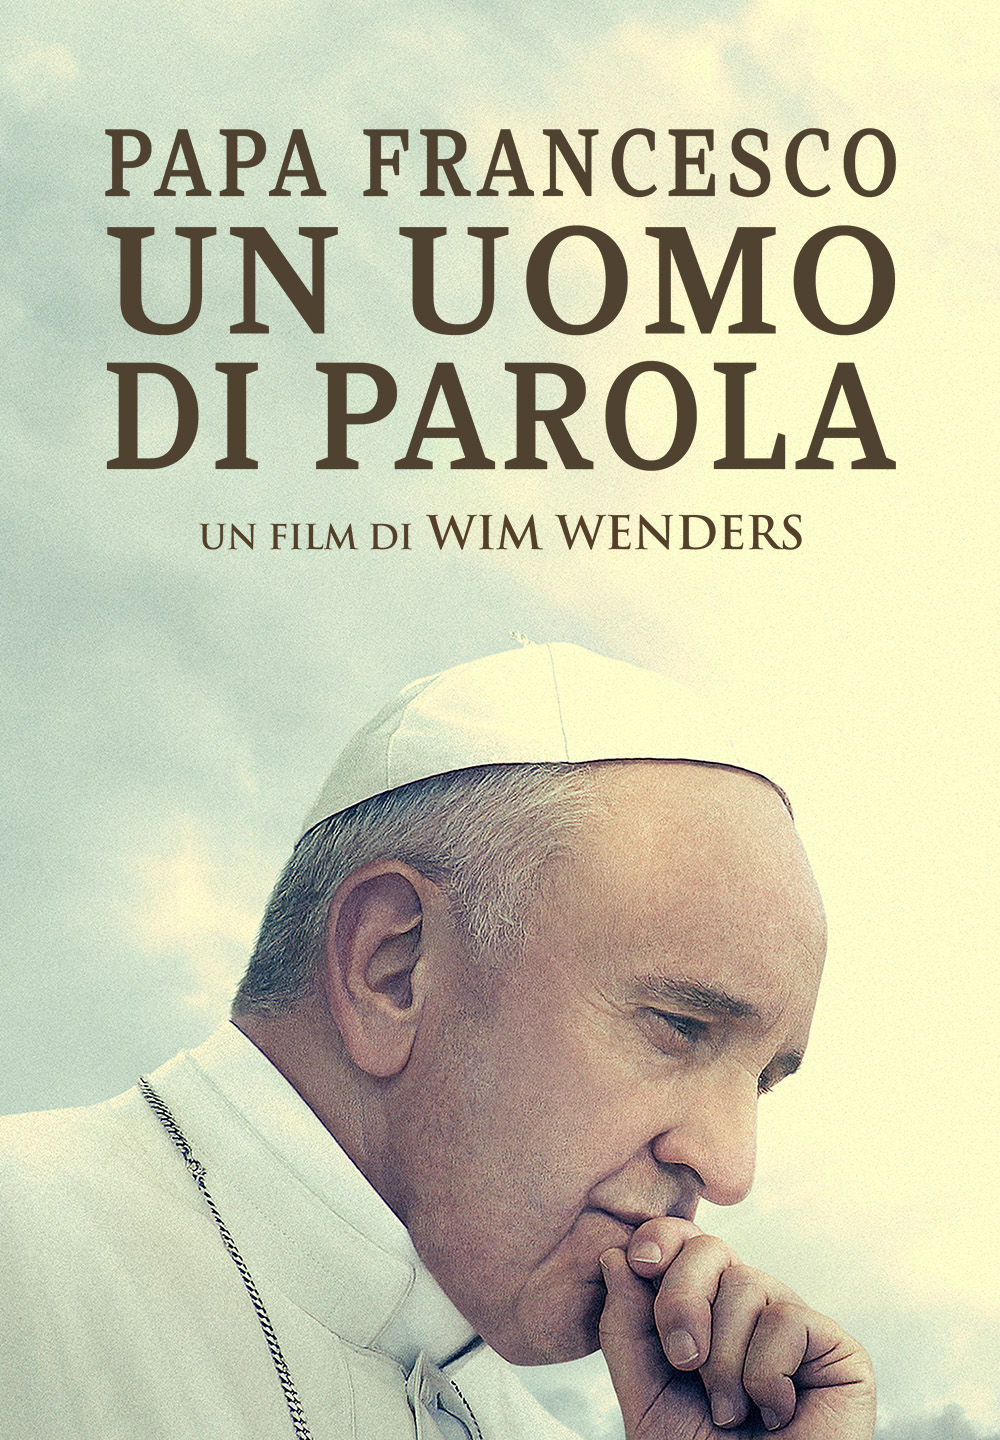 Papa Francesco – Un uomo di parola [HD] (2018)